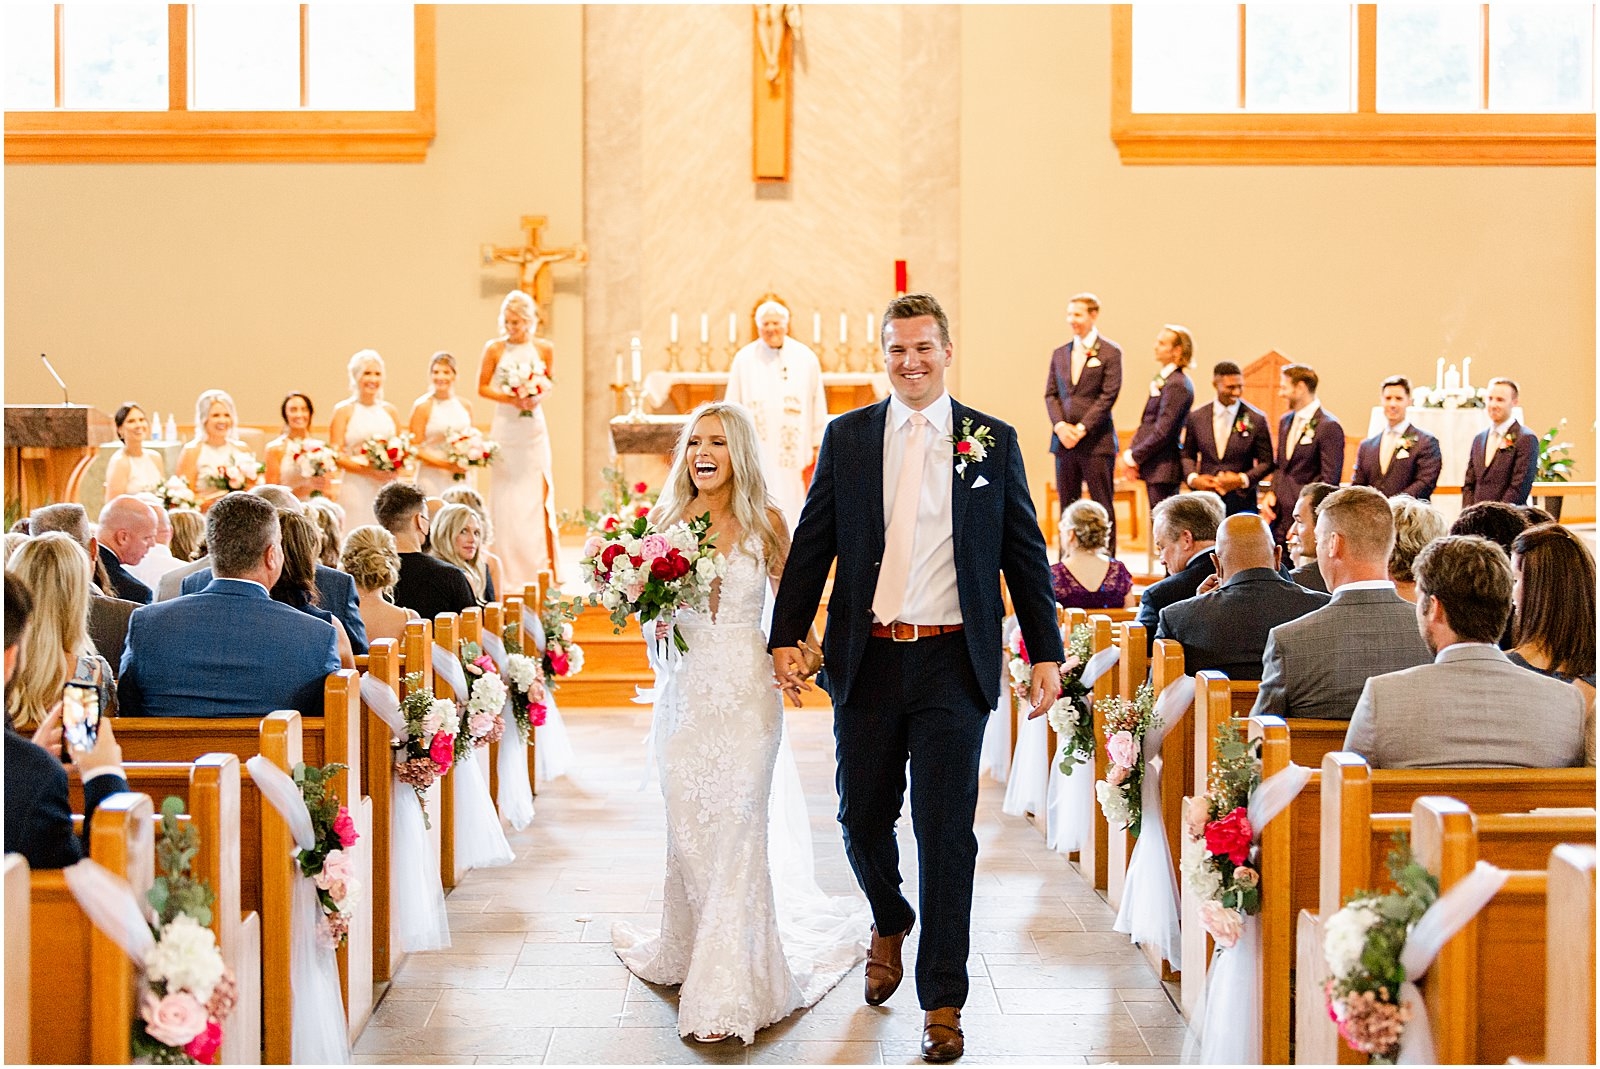 An Evansville Country Club Wedding | Madison and Christiaan | Bret and Brandie | Evansville Photographers | @bretandbrandie-0131.jpg